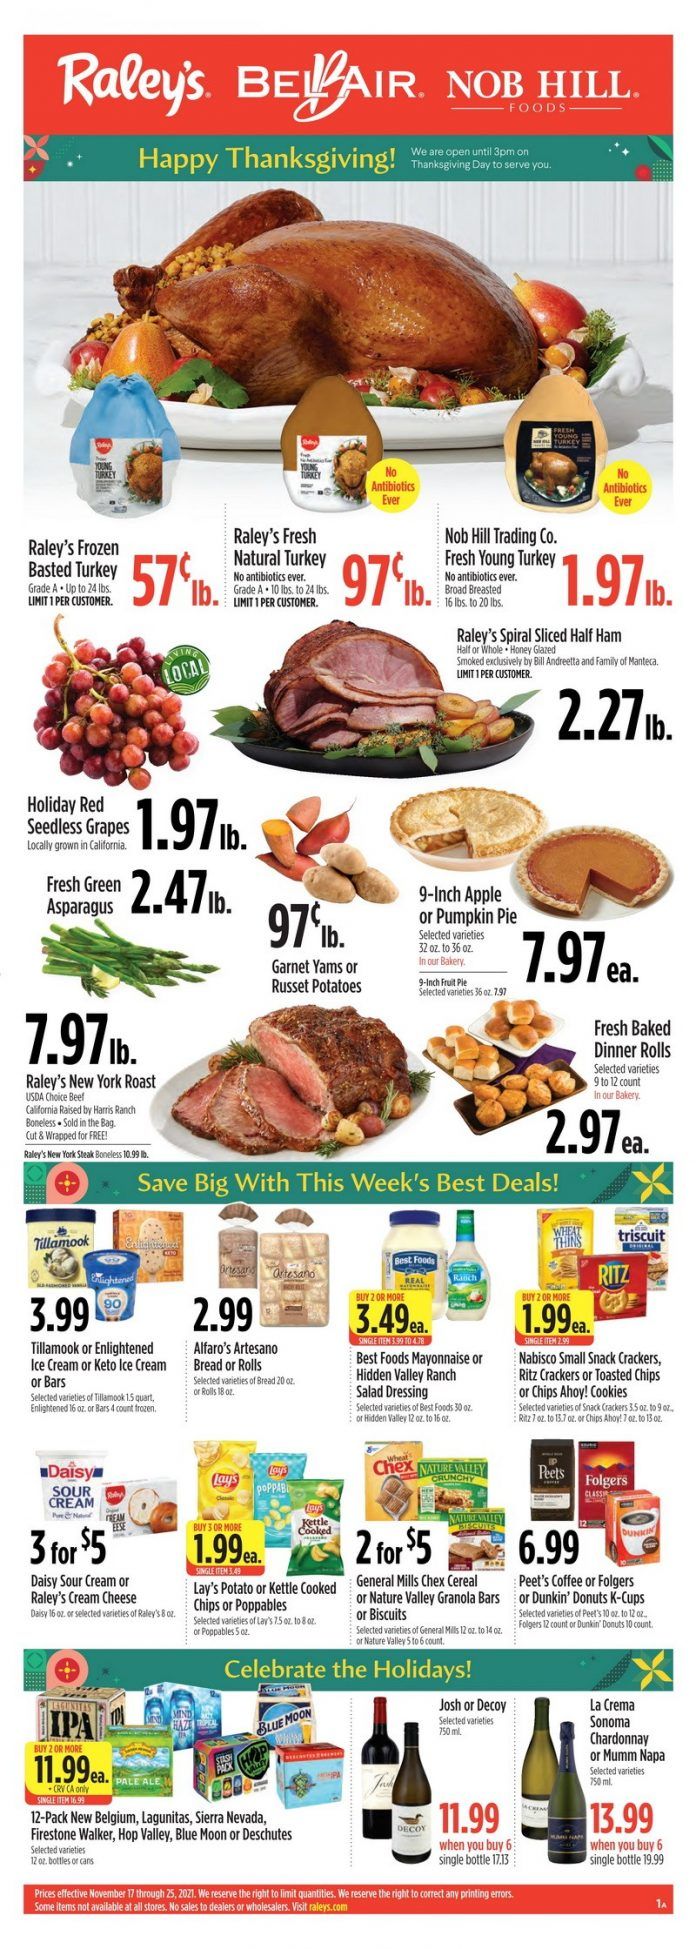 Raley's Supermarkets Weekly Ad Nov 17 Nov 25, 2021 (Thanksgiving